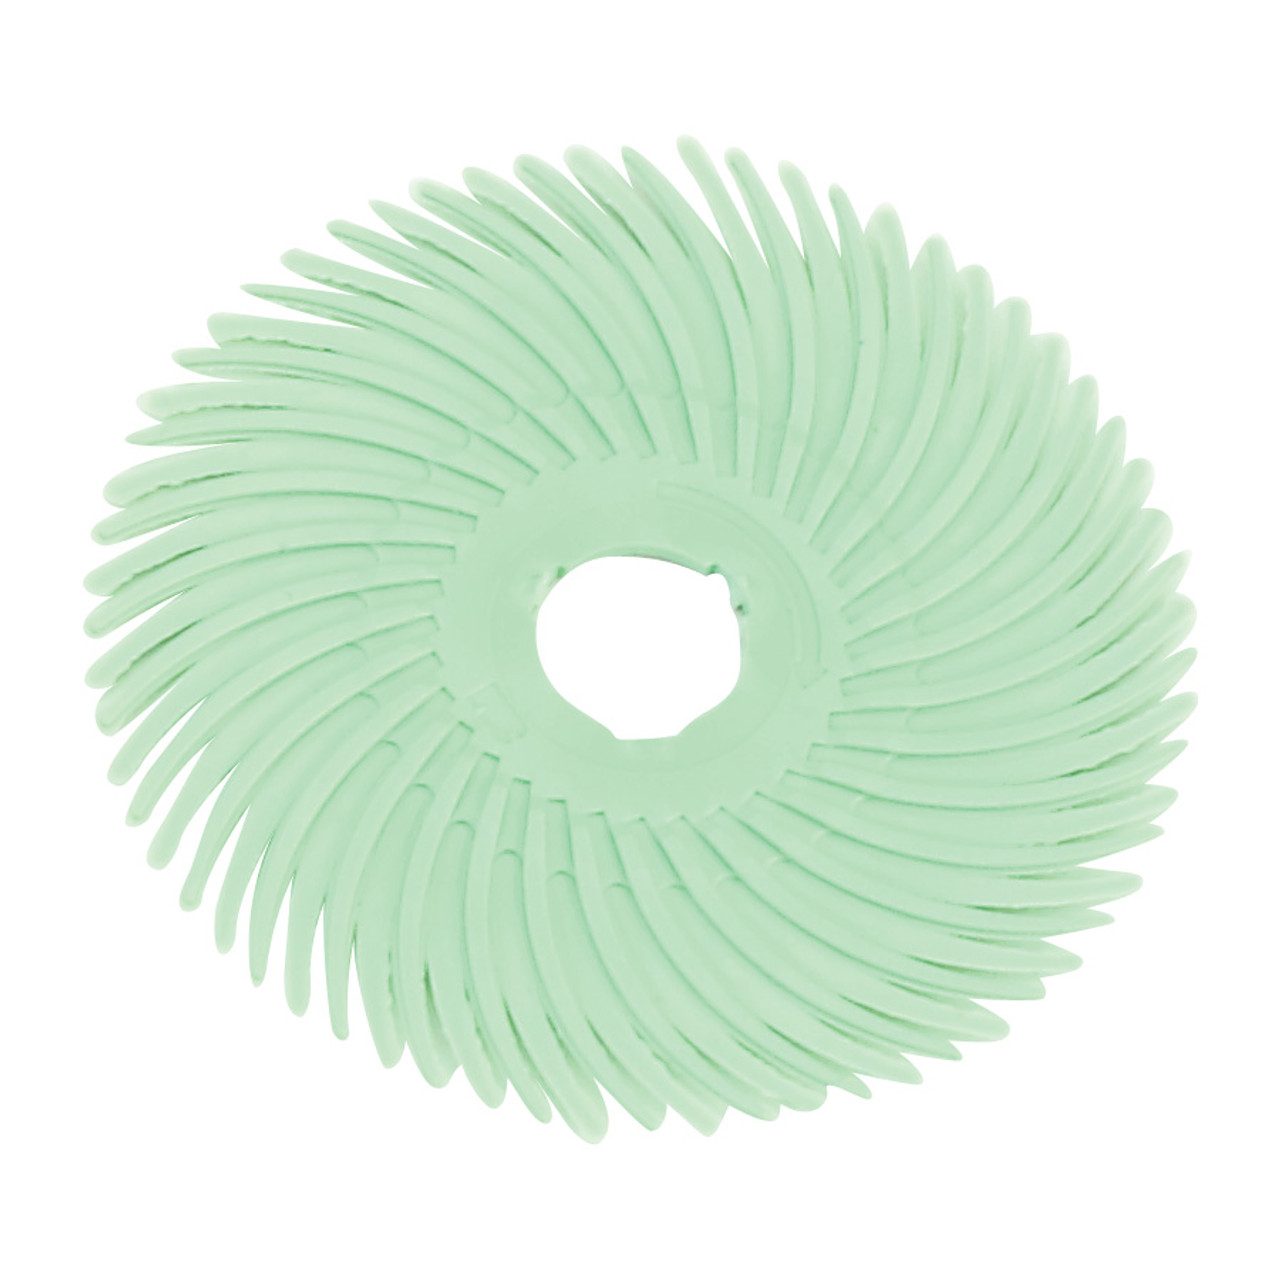 3M™ Radial Bristle Discs 2" (Pkg. of 40) - Light Green (1 Micron)